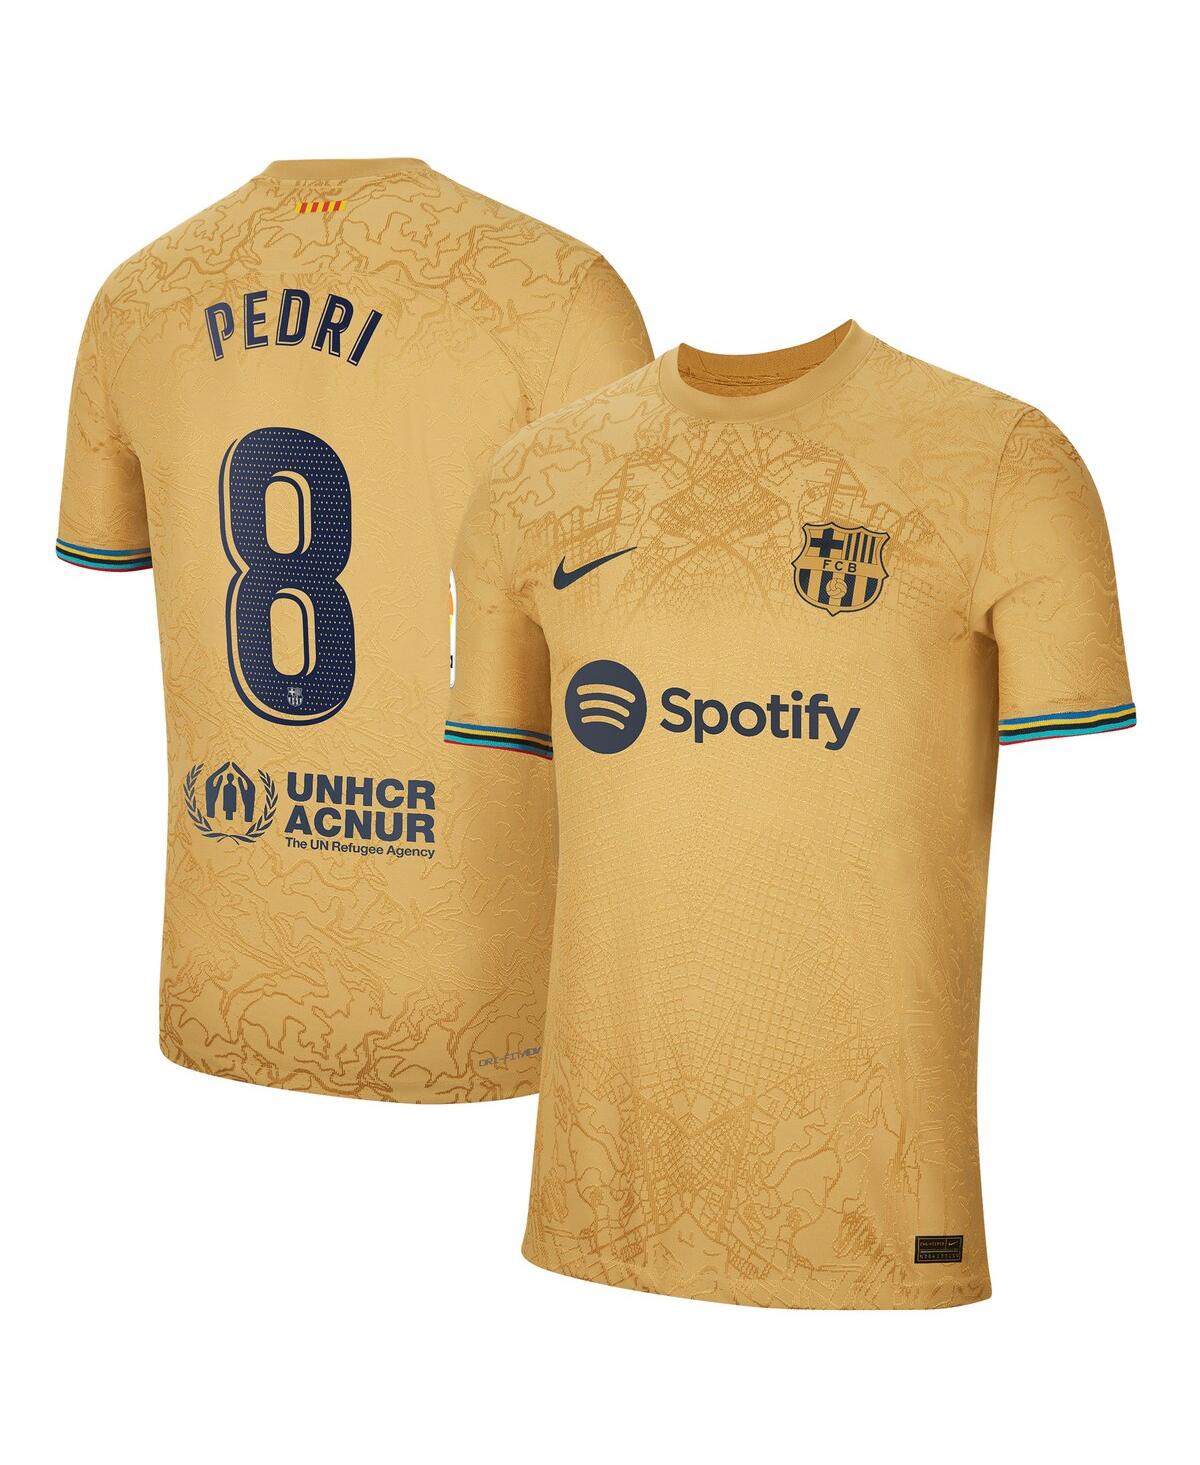 Men's Nike Pedri Gold Barcelona 2022/23 Away Authentic Player Jersey - Gold